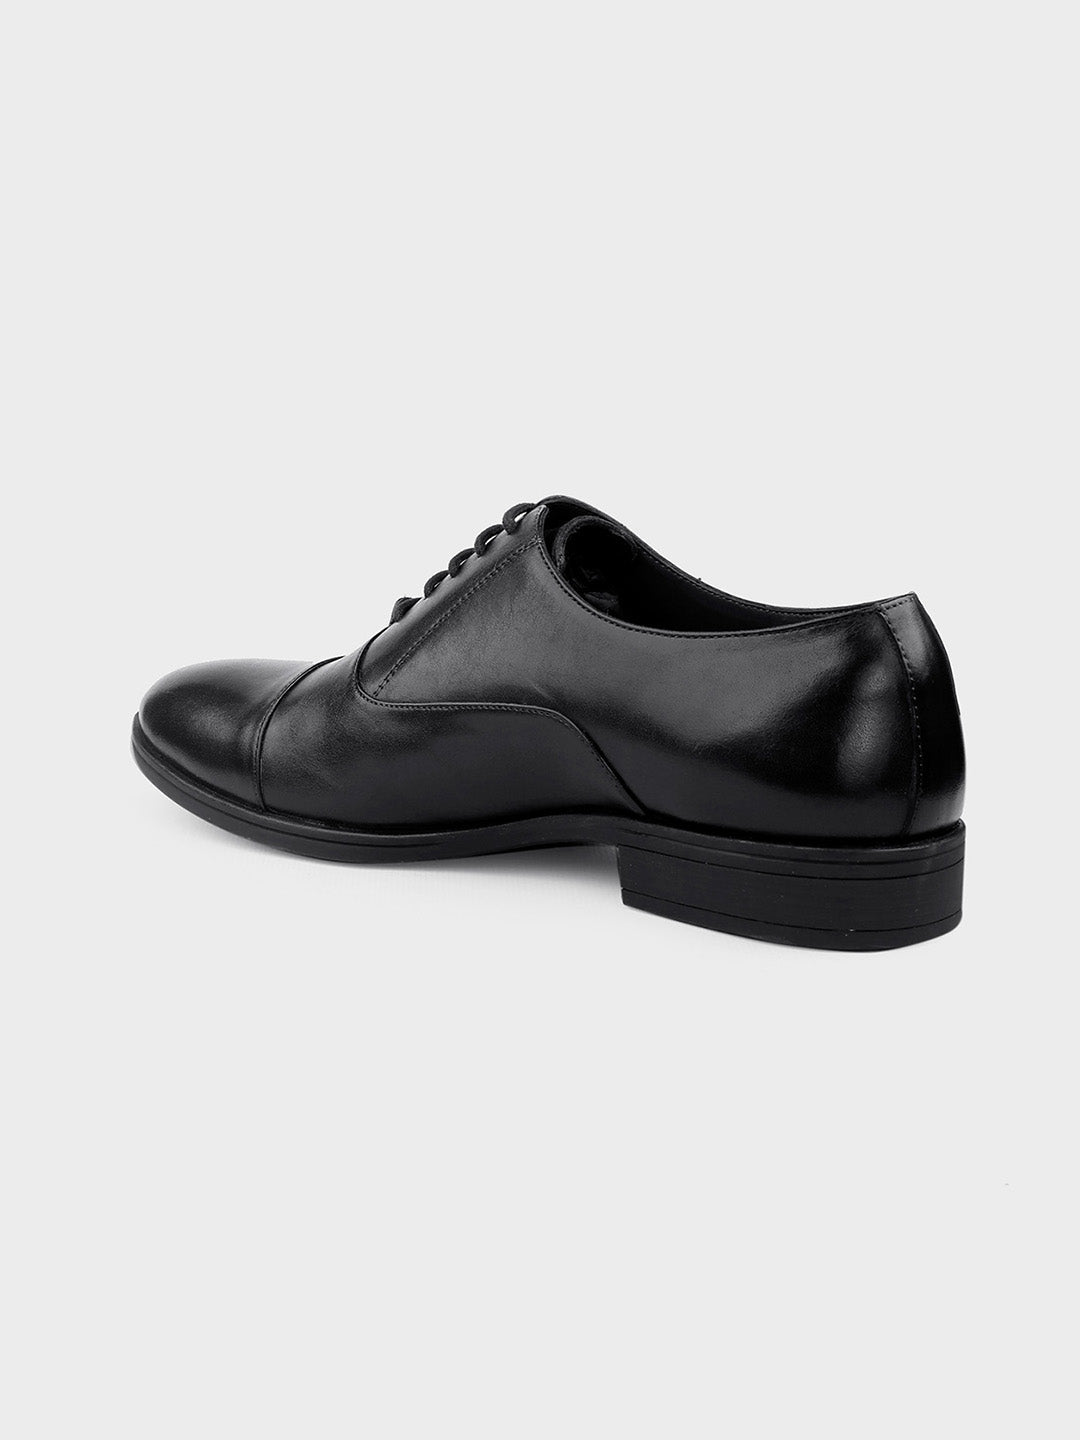 Men's Classic Black Leather Oxford Lace-Up Shoes